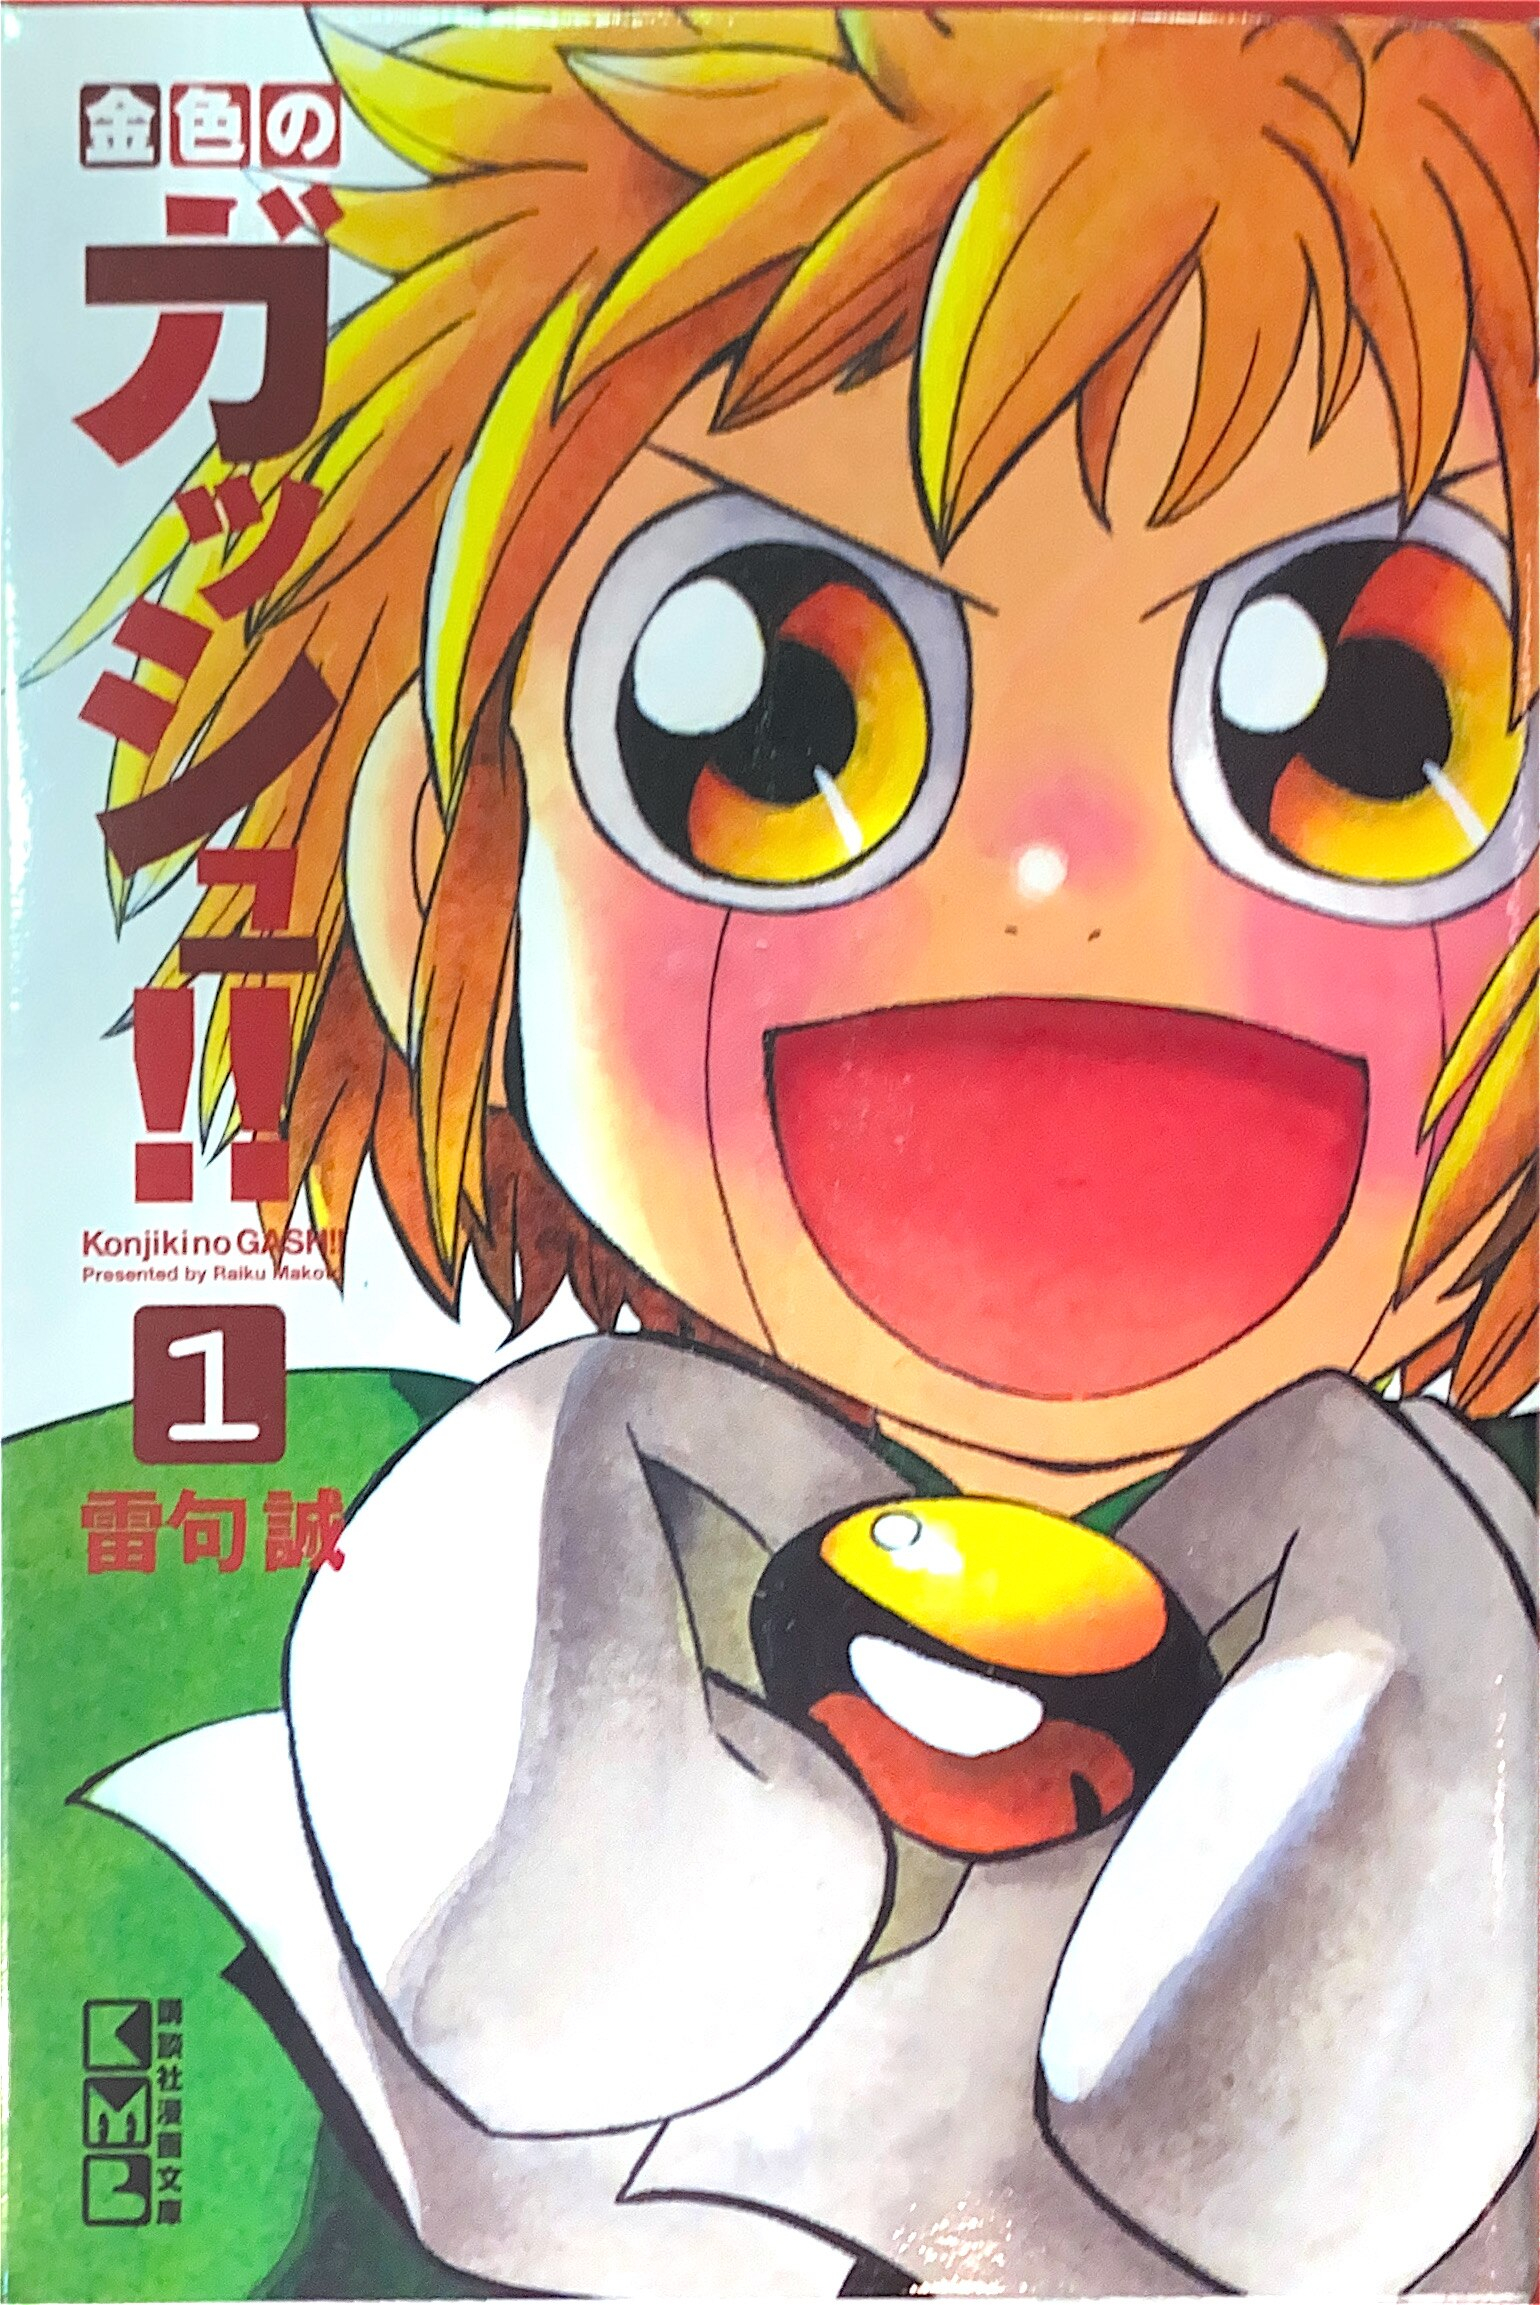 1540x2305 Kodansha Manga Bunko Makoto Raiku Golden Gash (Zatch Bell) !! Paperback Version Complete 16 Issue Set | Mandarake Online Shop